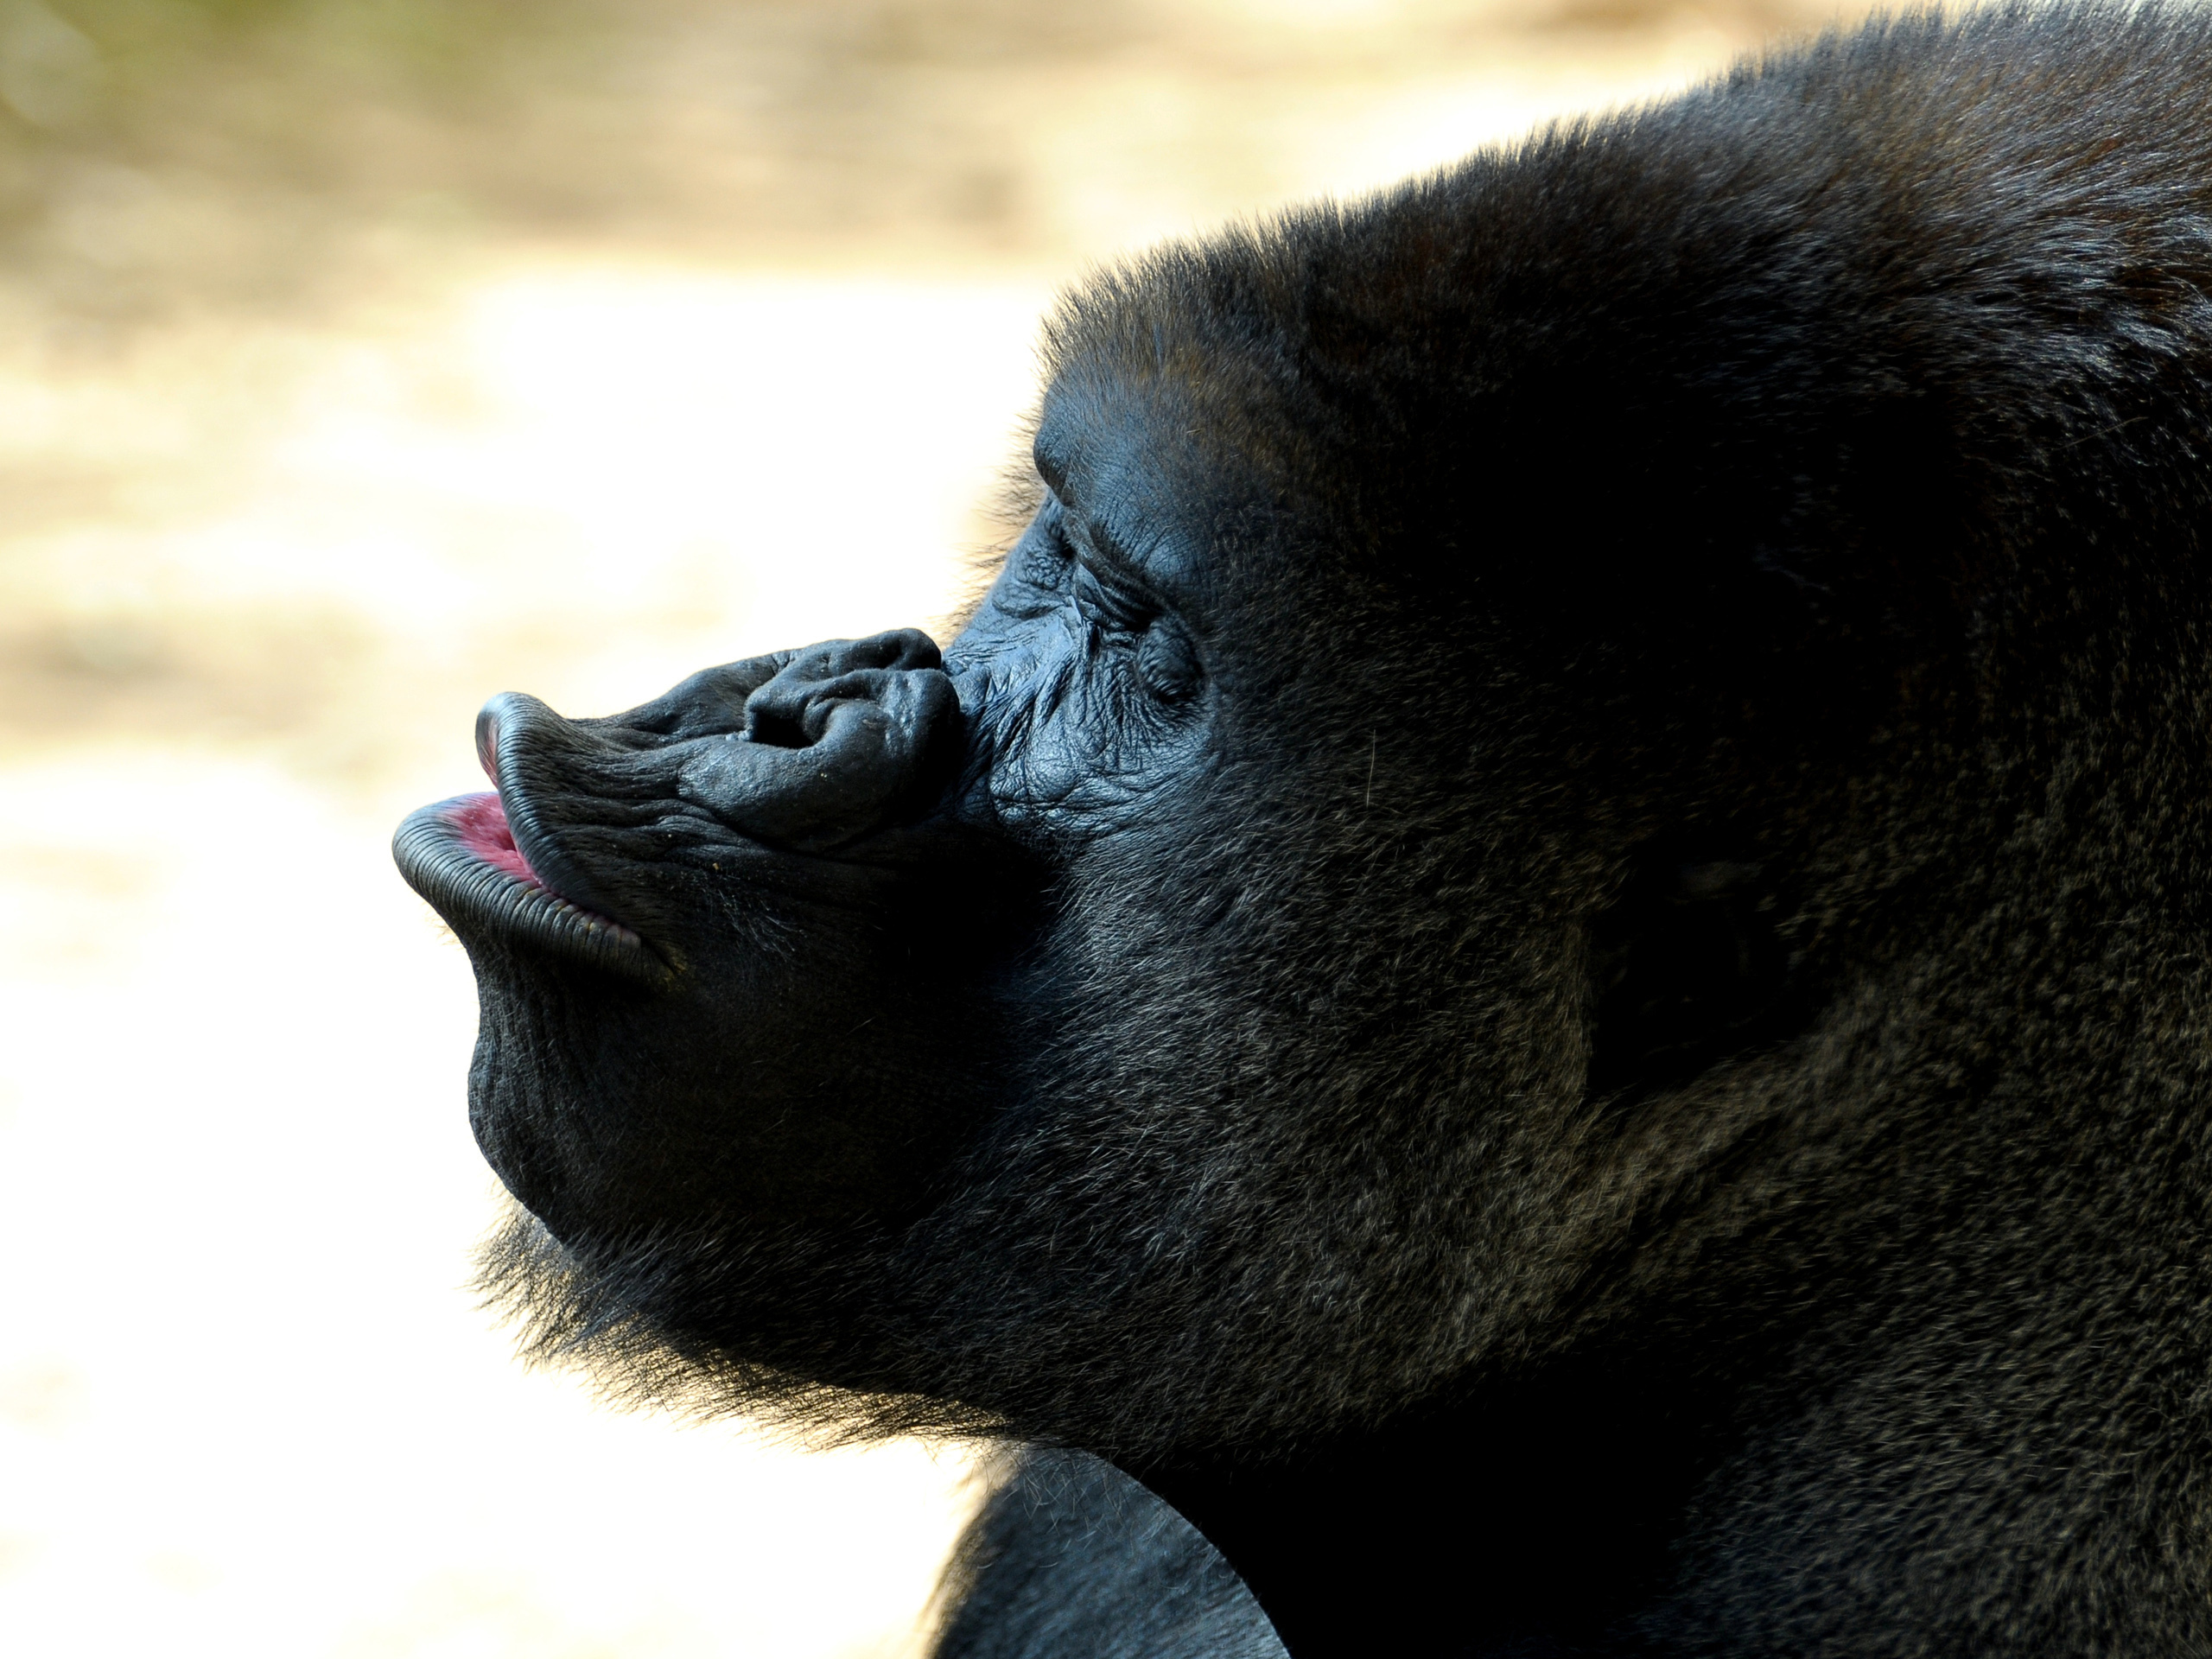 A powerful gorilla portrait displaying strength and majesty.